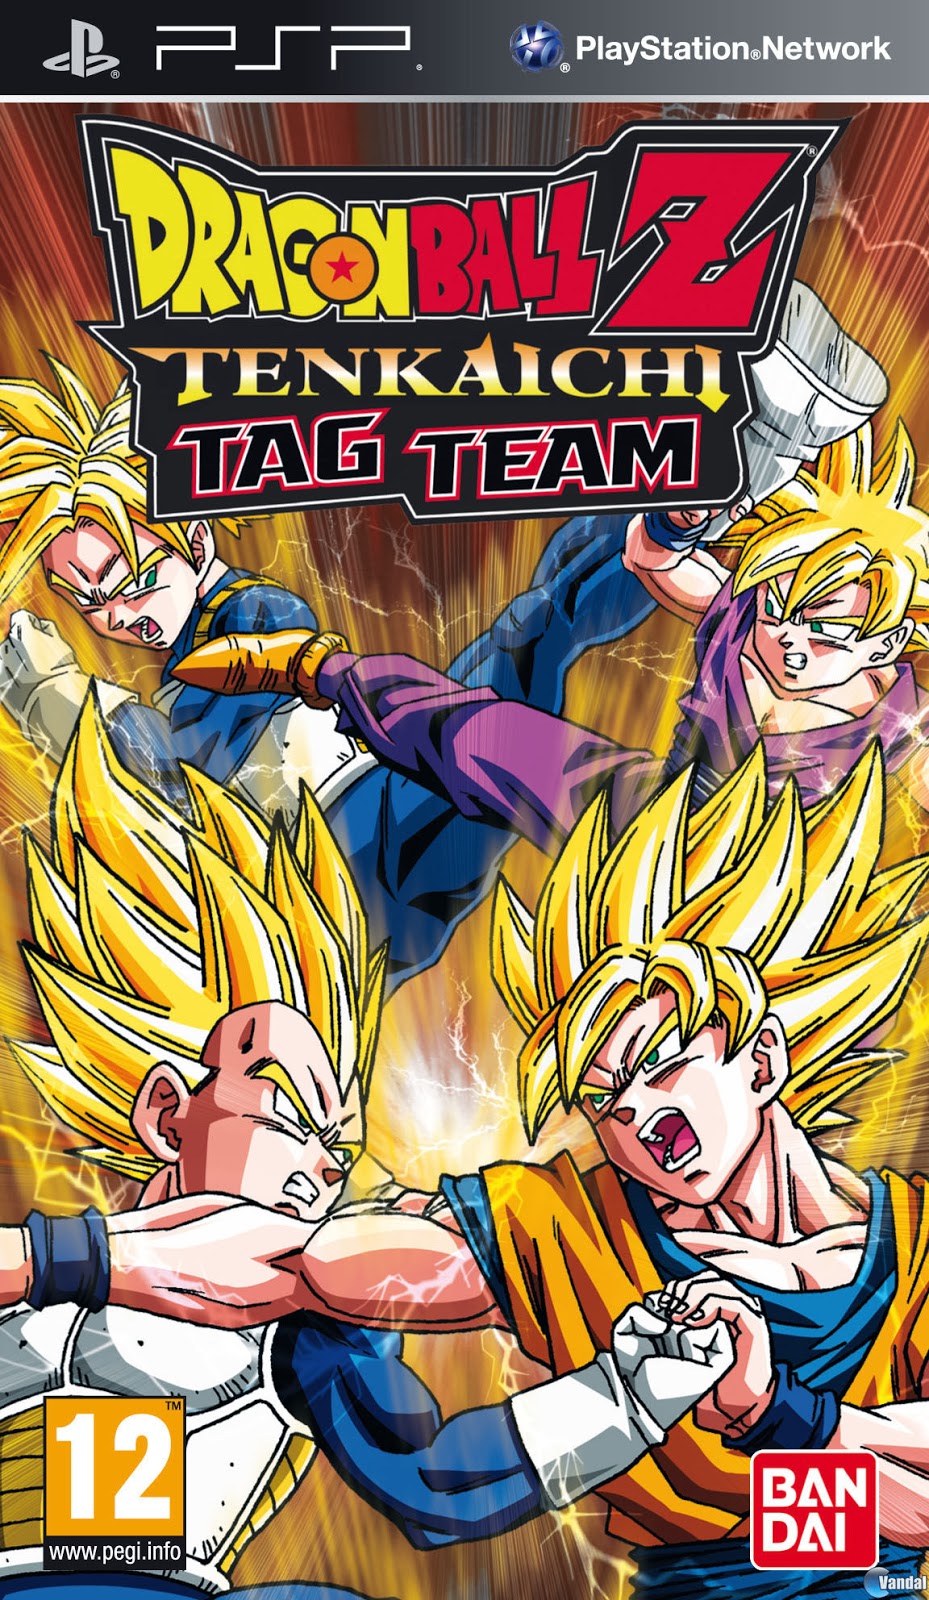 Juegos de PSP y PS2: Dragon Ball Z: Tenkaichi Tag Team Ligero